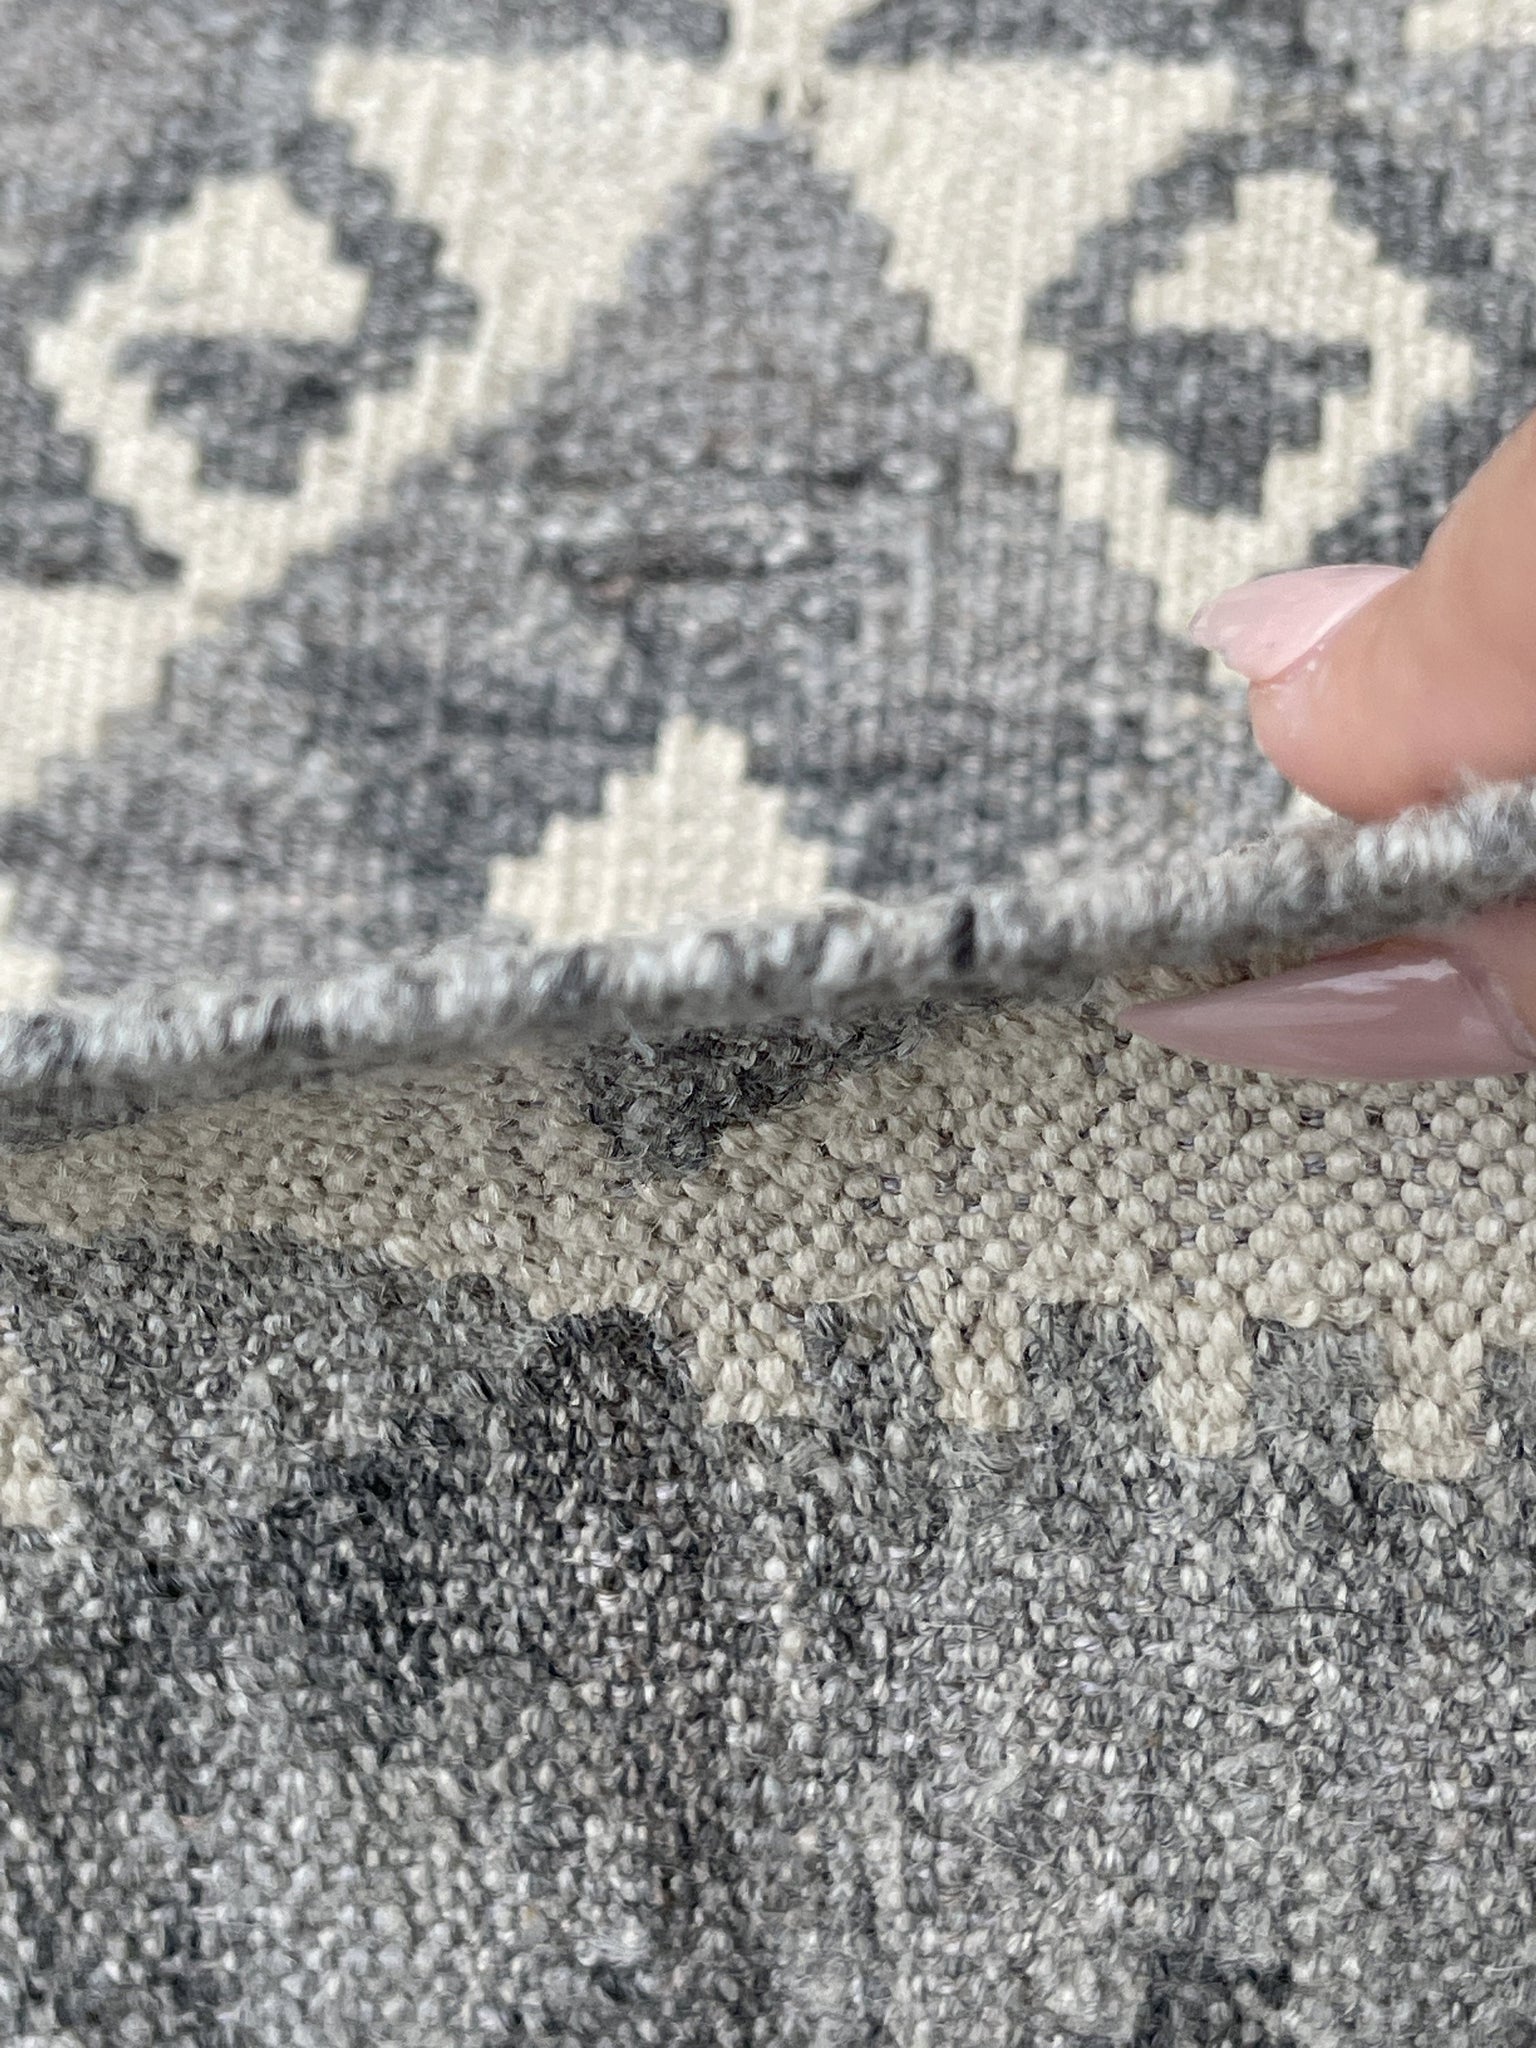 3x8 (90x245) Handmade Afghan Kilim Runner Rug | Light Grey Gray Ivory Cream | Flatweave Flat Weave Tribal Turkish Moroccan Oriental Wool